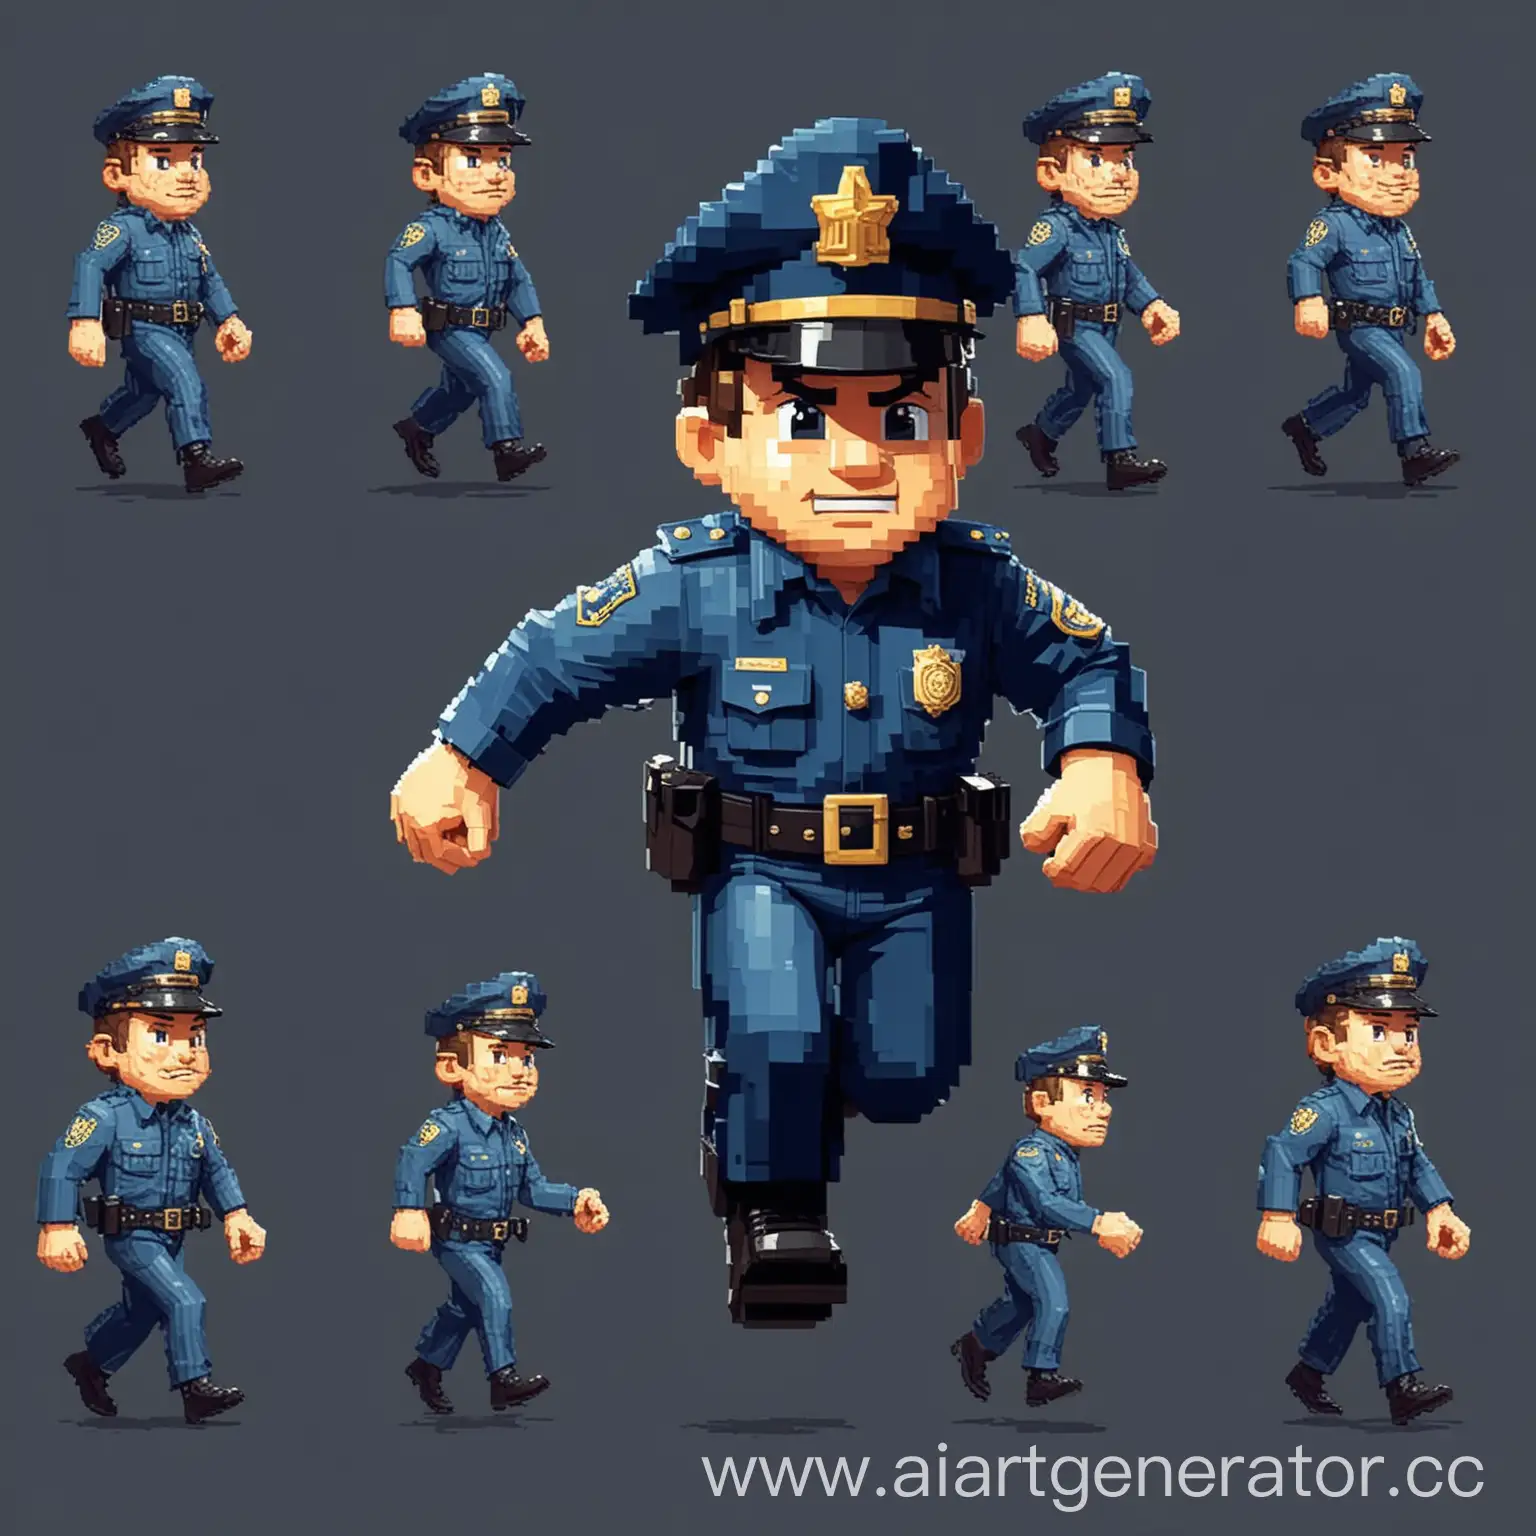 Little-Running-Policeman-in-Pixel-Art-Style